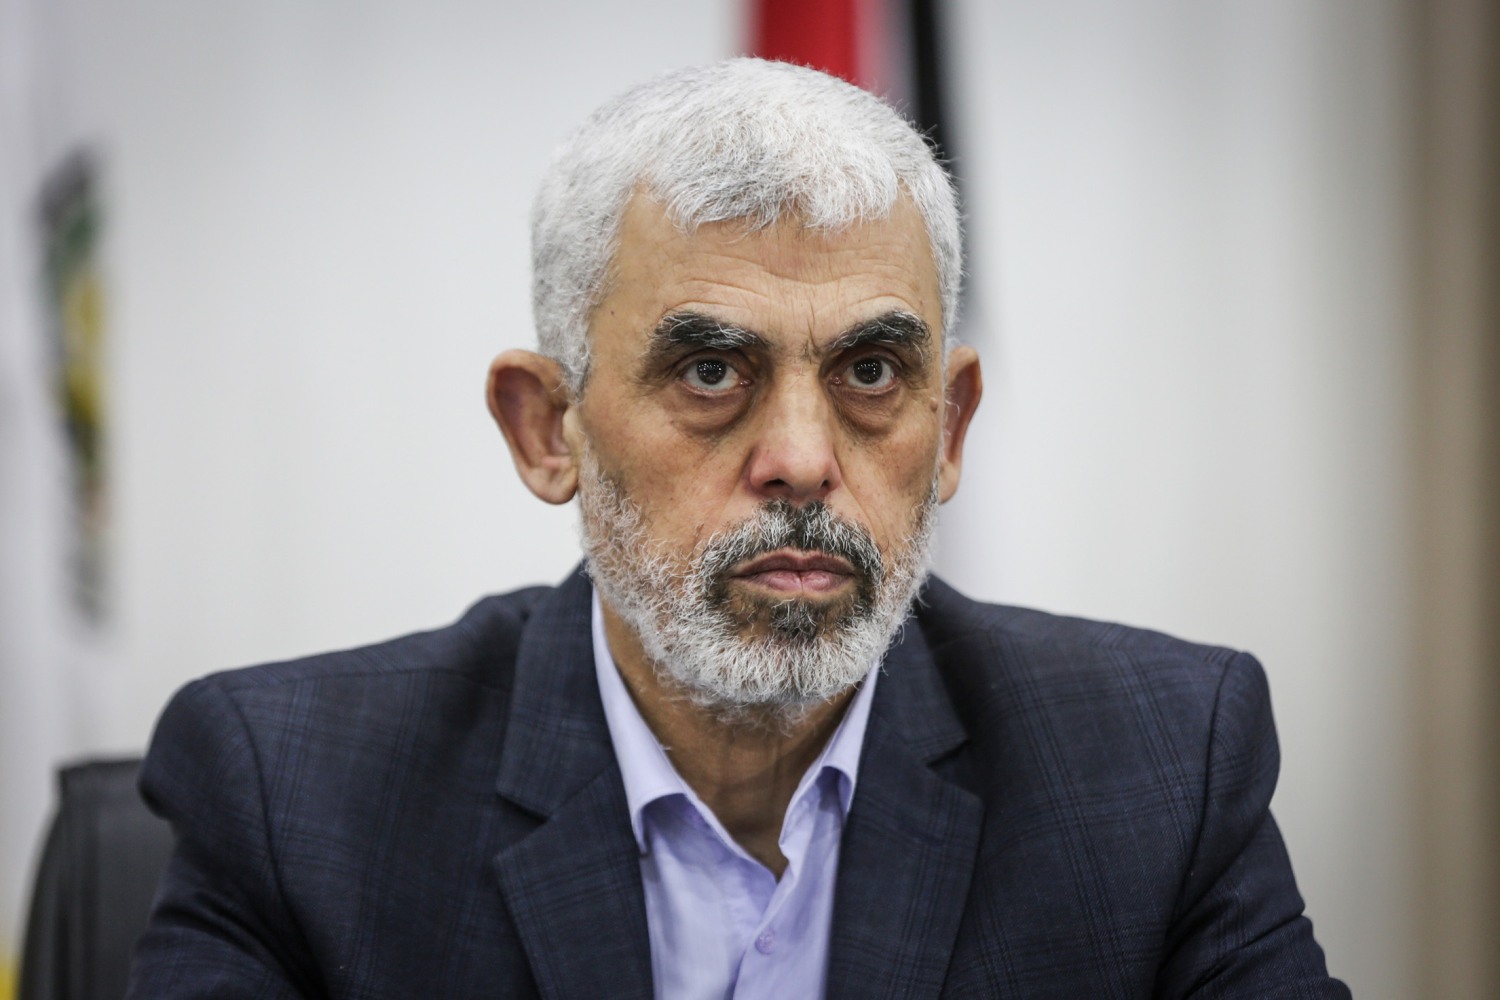 Israels target to dismantle Hamas leadership Who are Hamas key figures